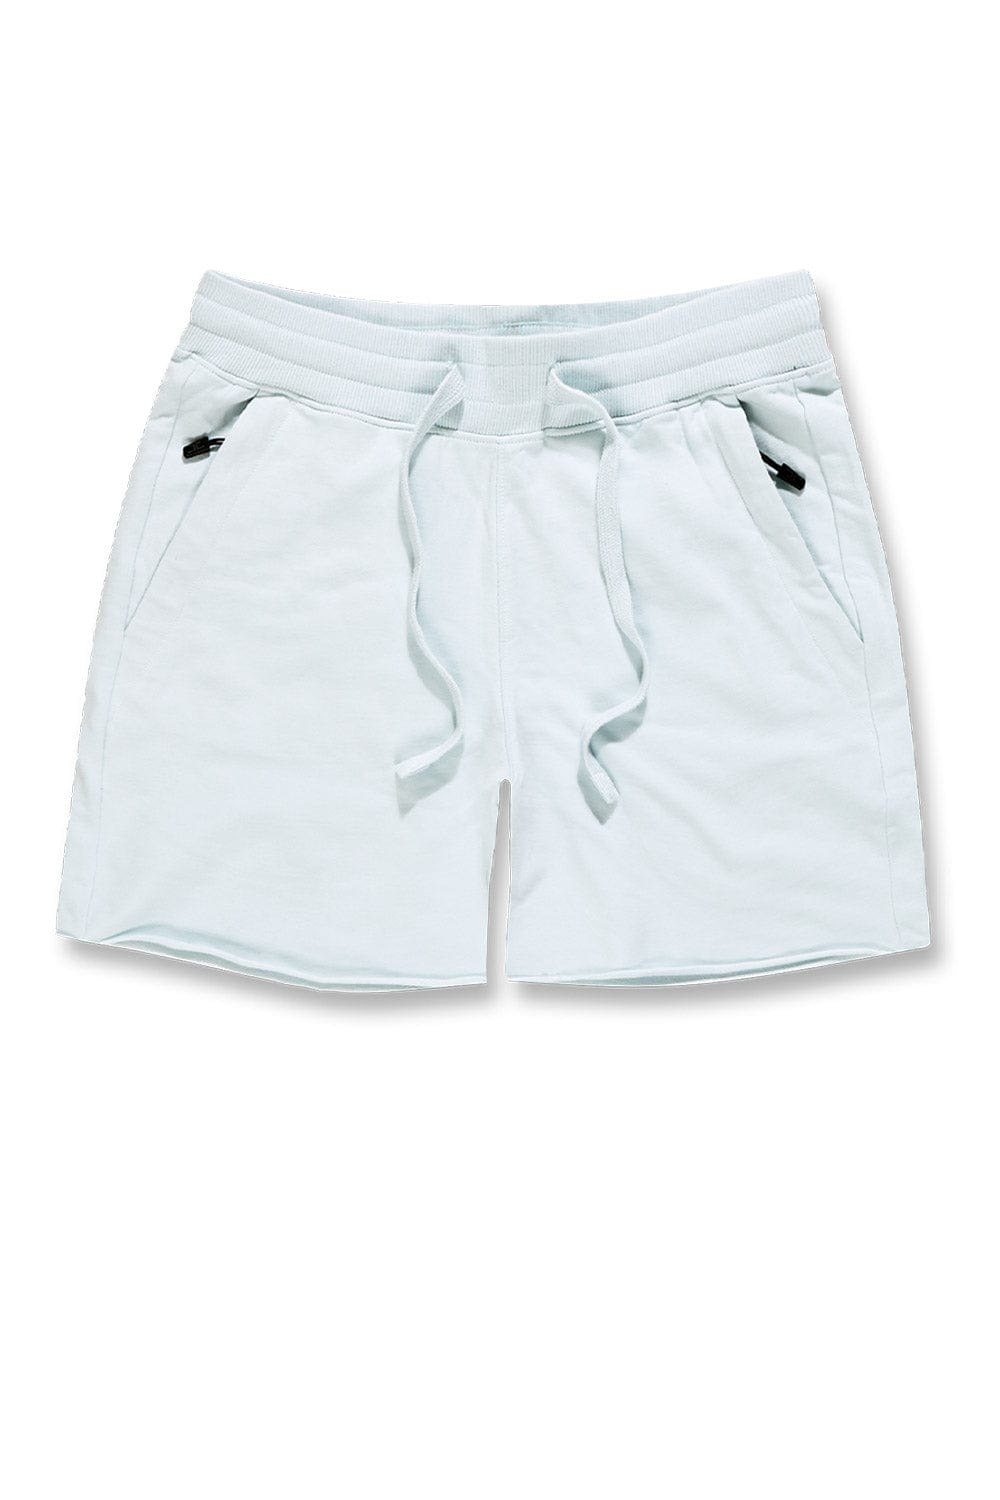 Jordan Craig Athletic - Summer Breeze Knit Shorts Coastal Blue / S